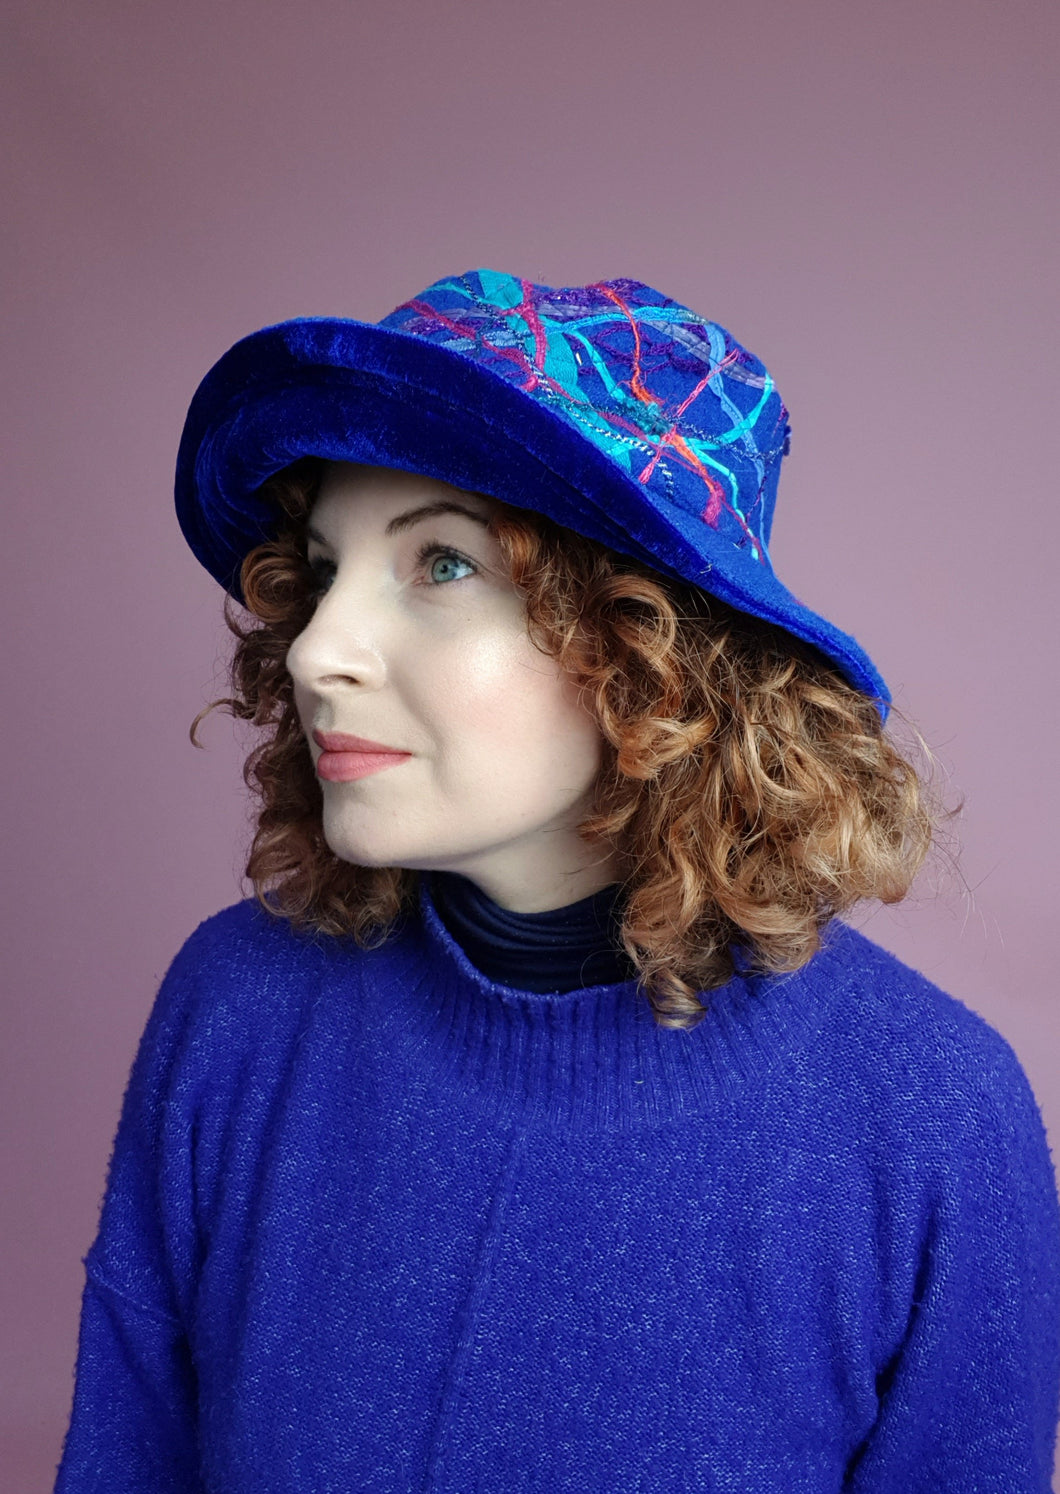 Boiled Wool Brimmed Hat in Royal Blue